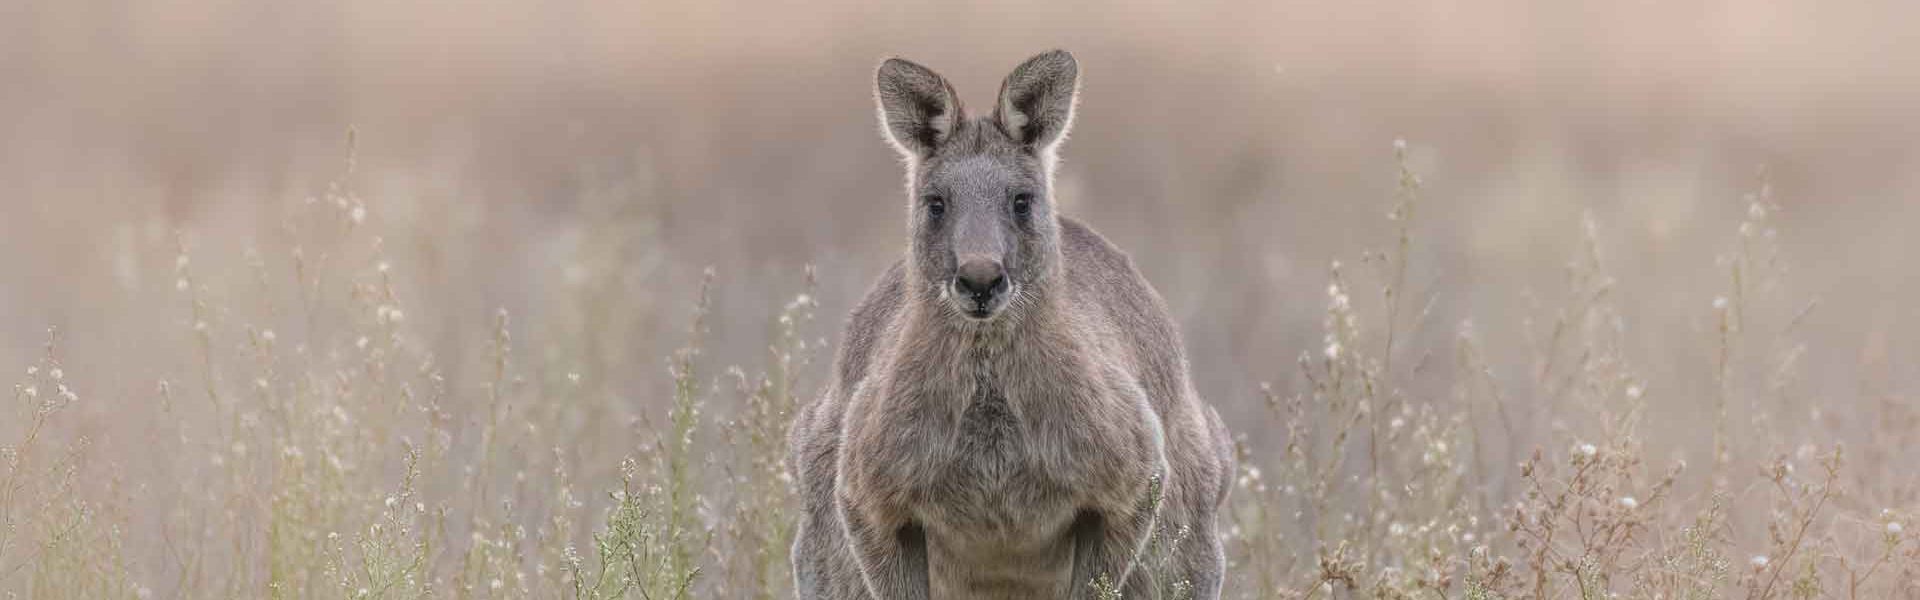 Kangaroo shooting in Australia is mass-slaughter of wildlife... for profit  | Animals Australia